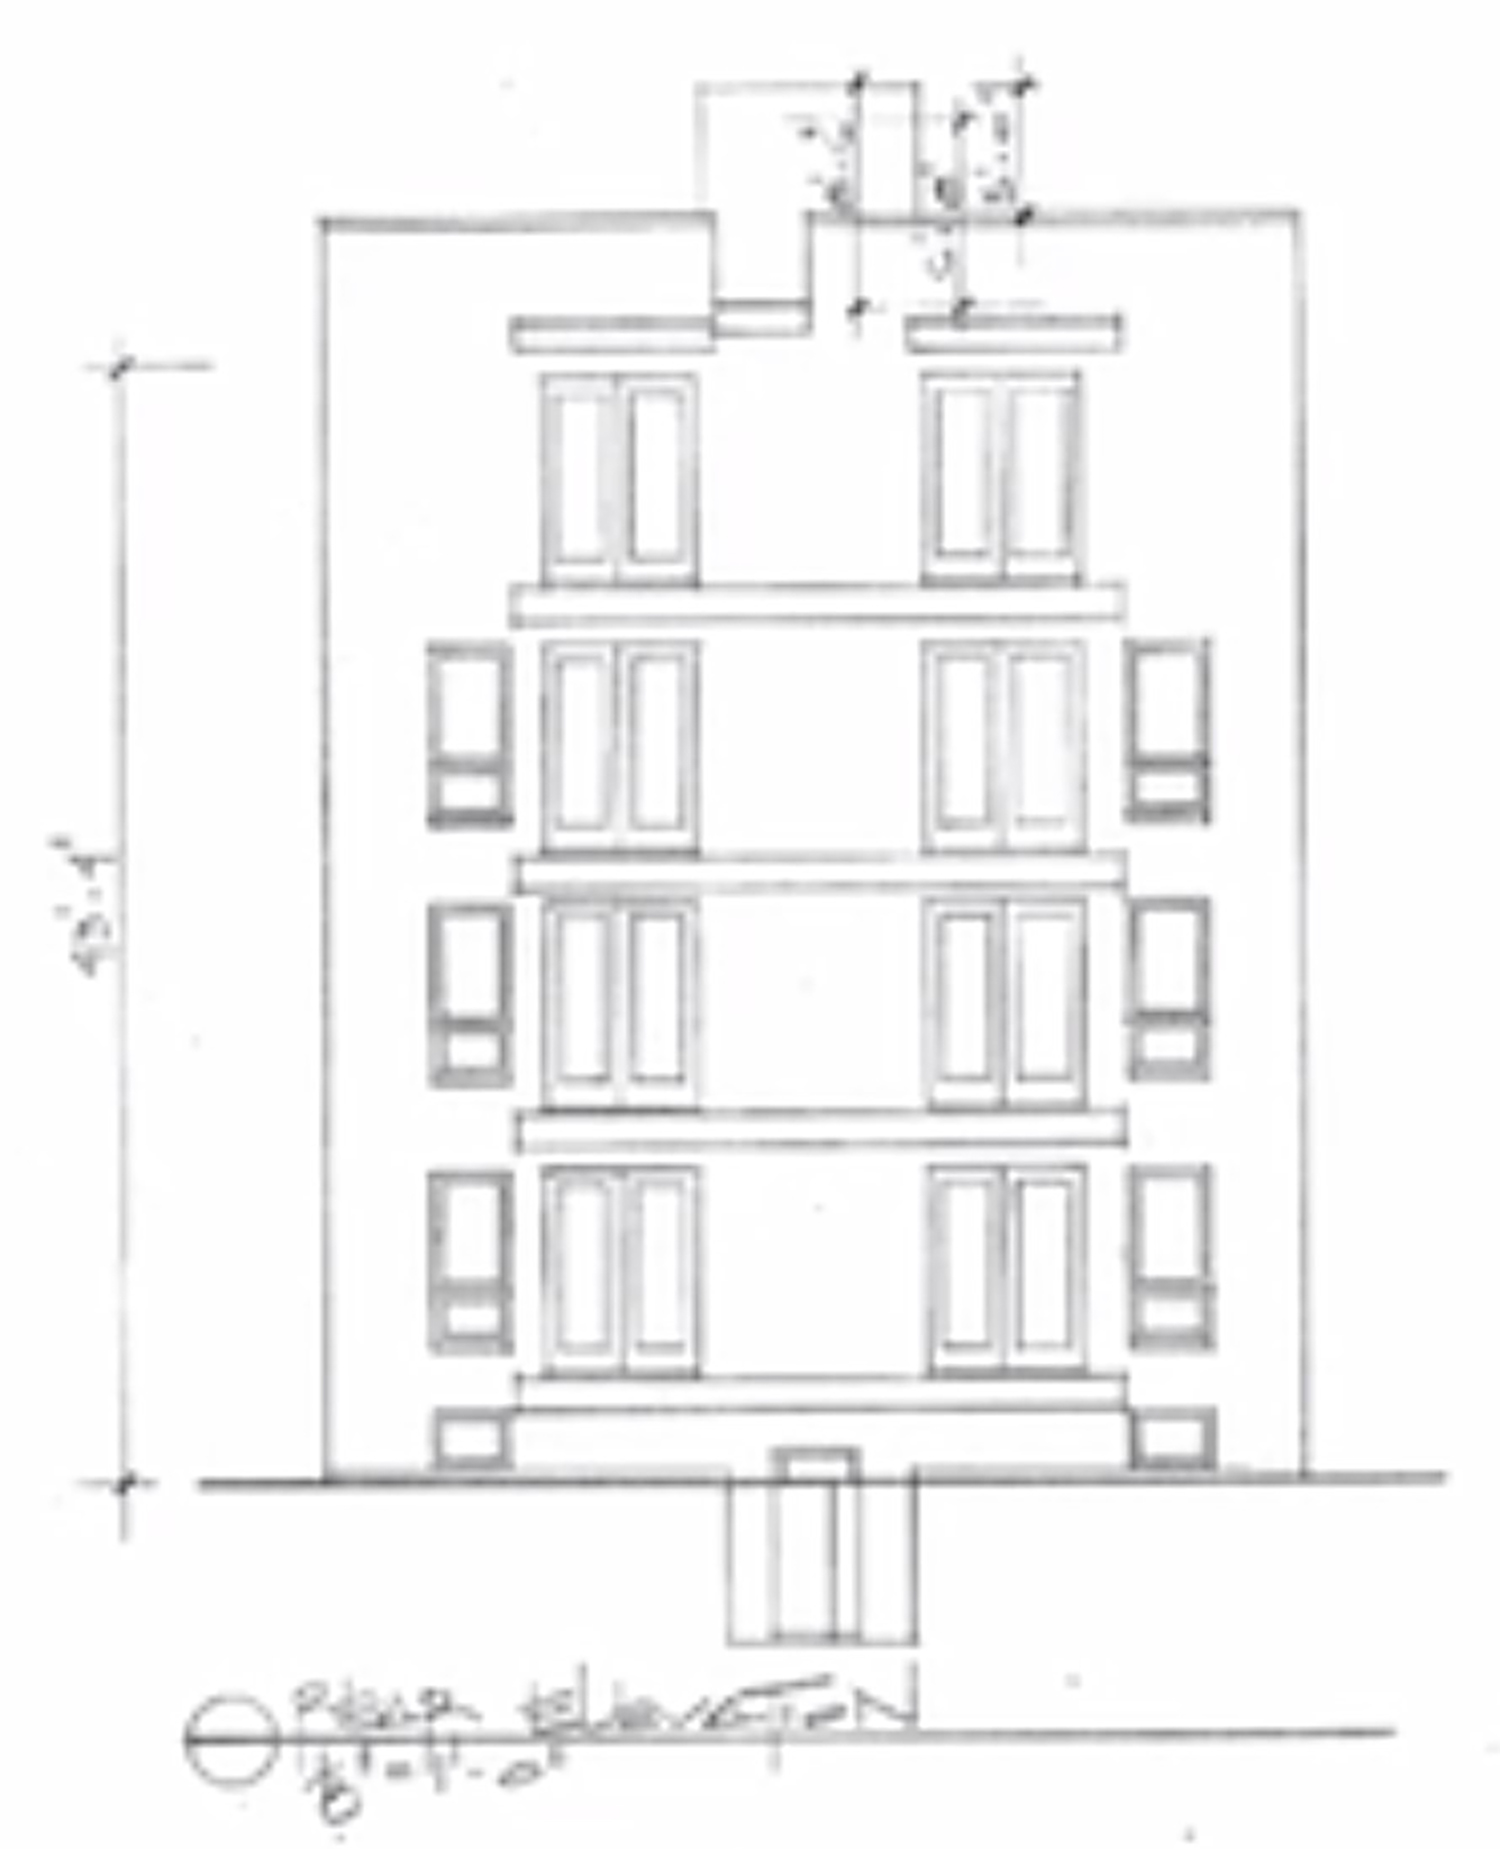 Rear Elevation for 719 N Elizabeth Street. Drawing by Hanna Architects